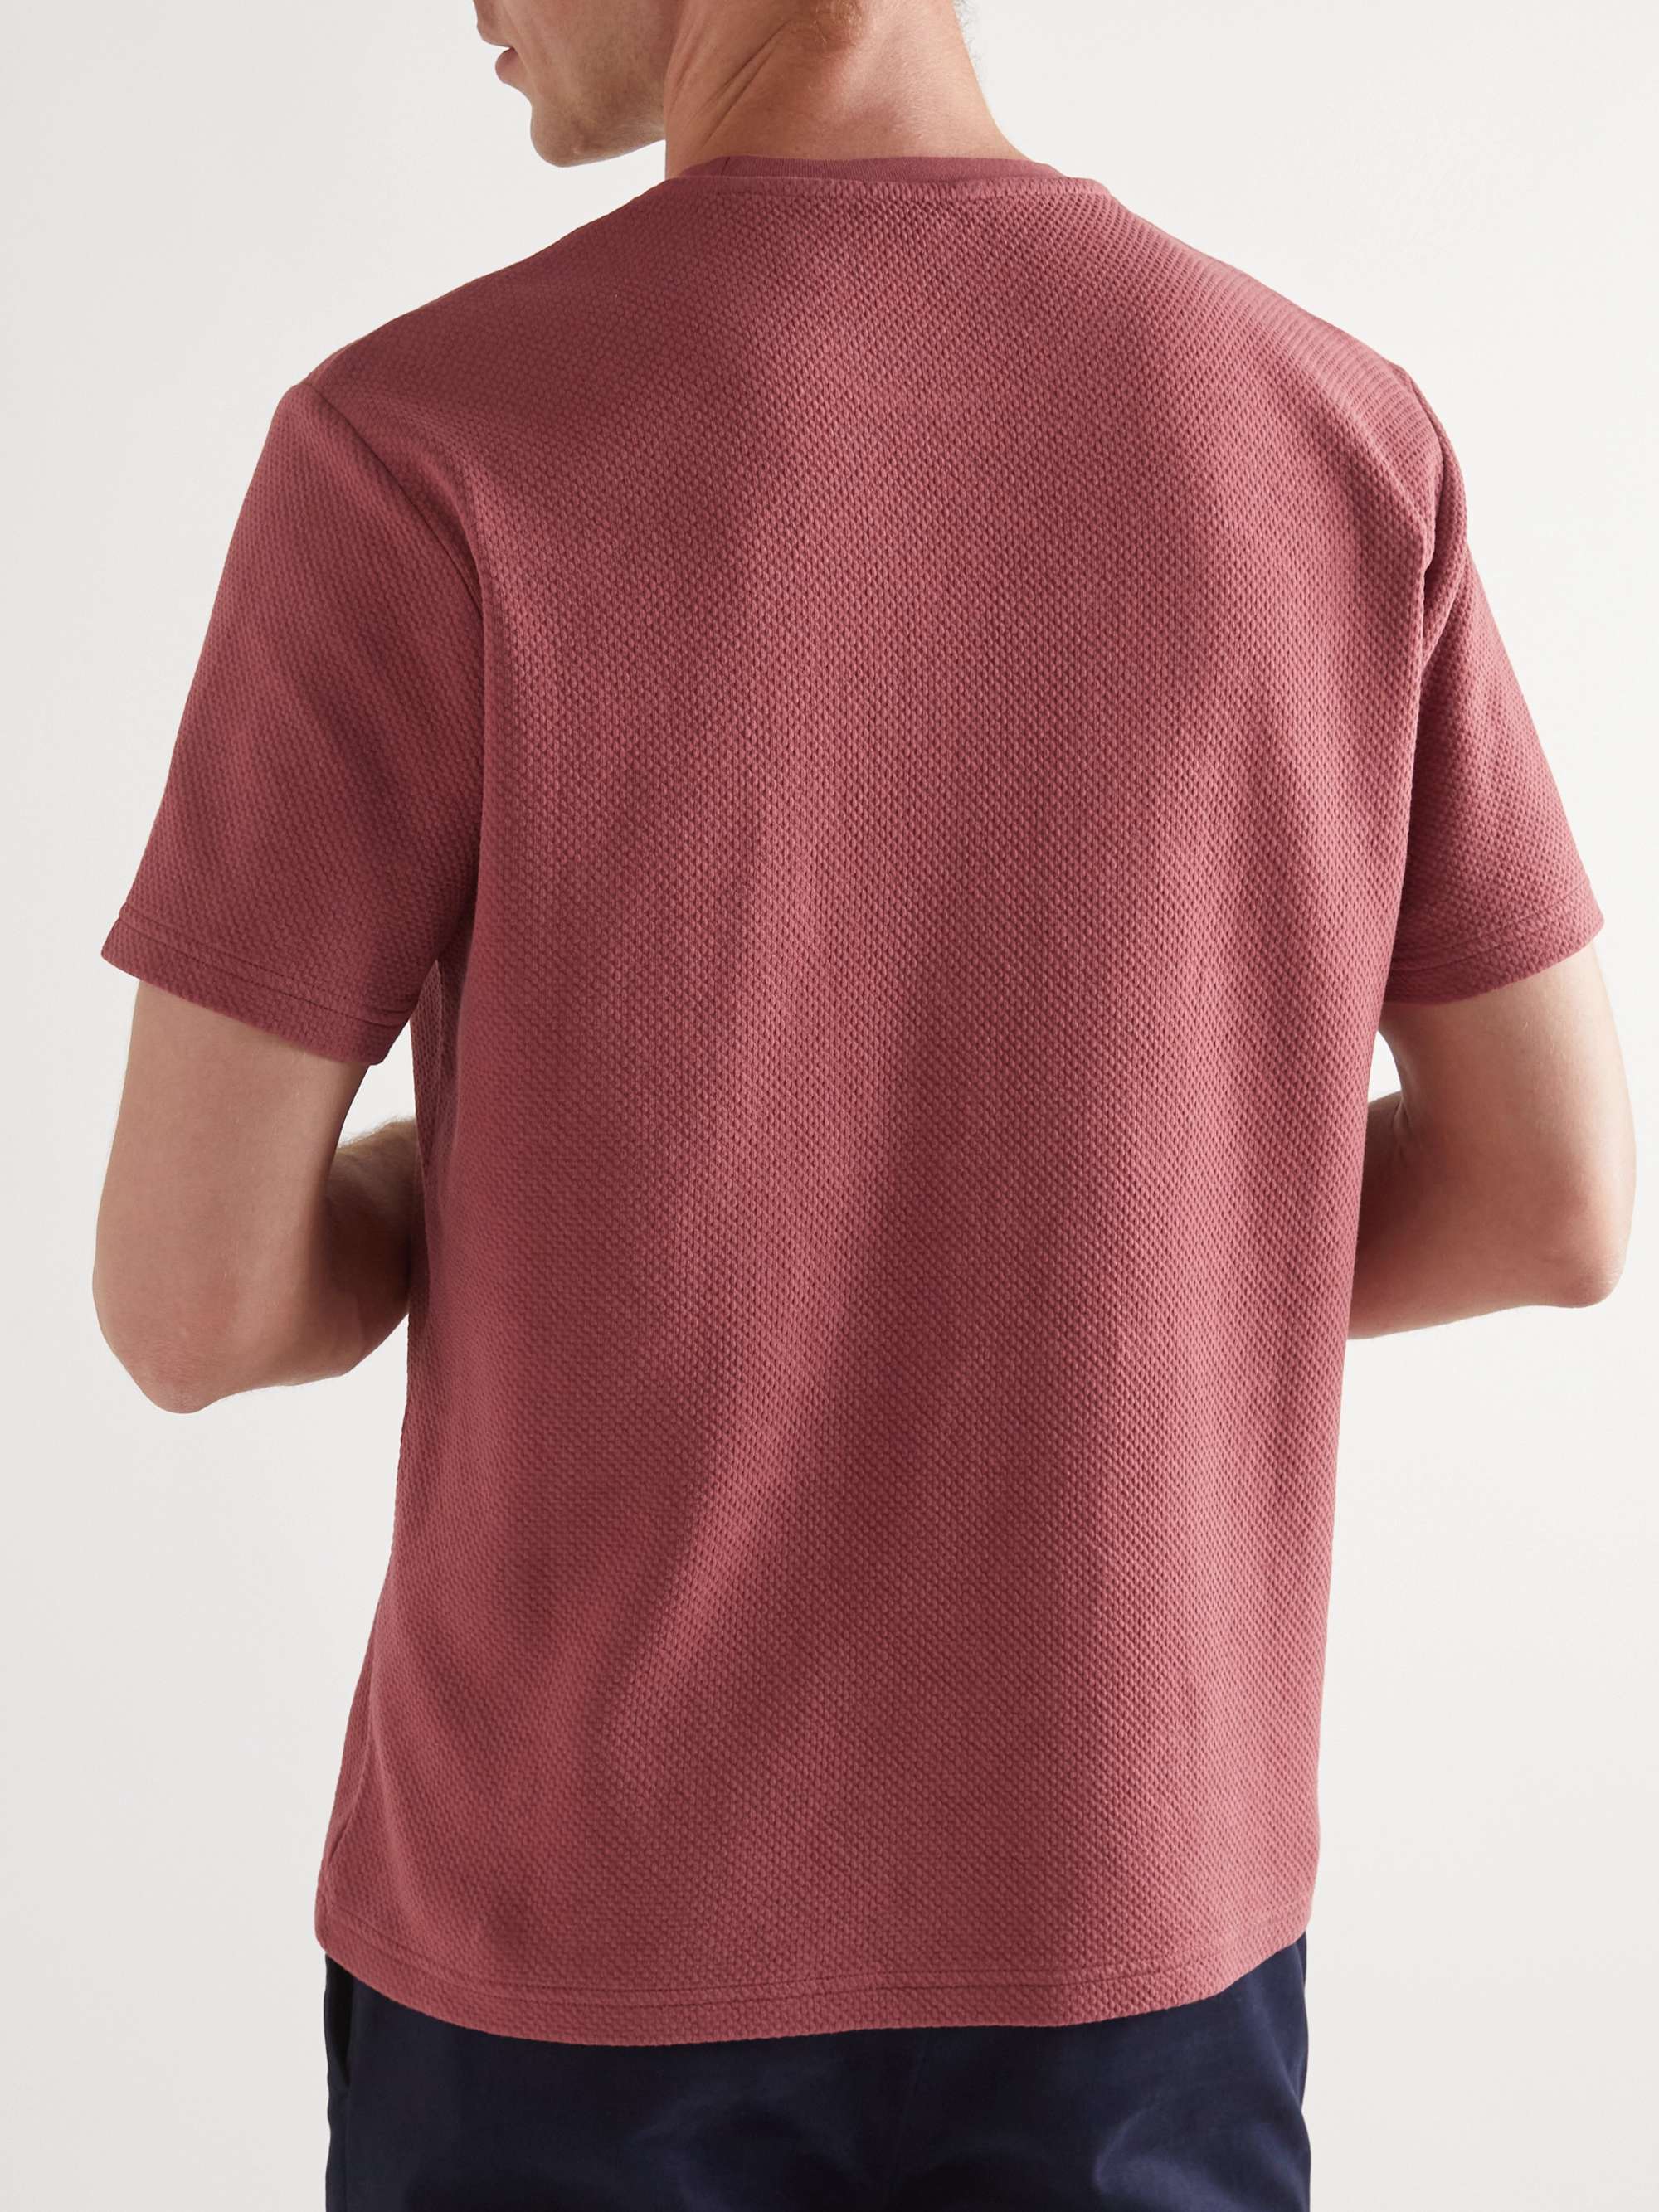 MR P. Textured Organic Cotton T-Shirt